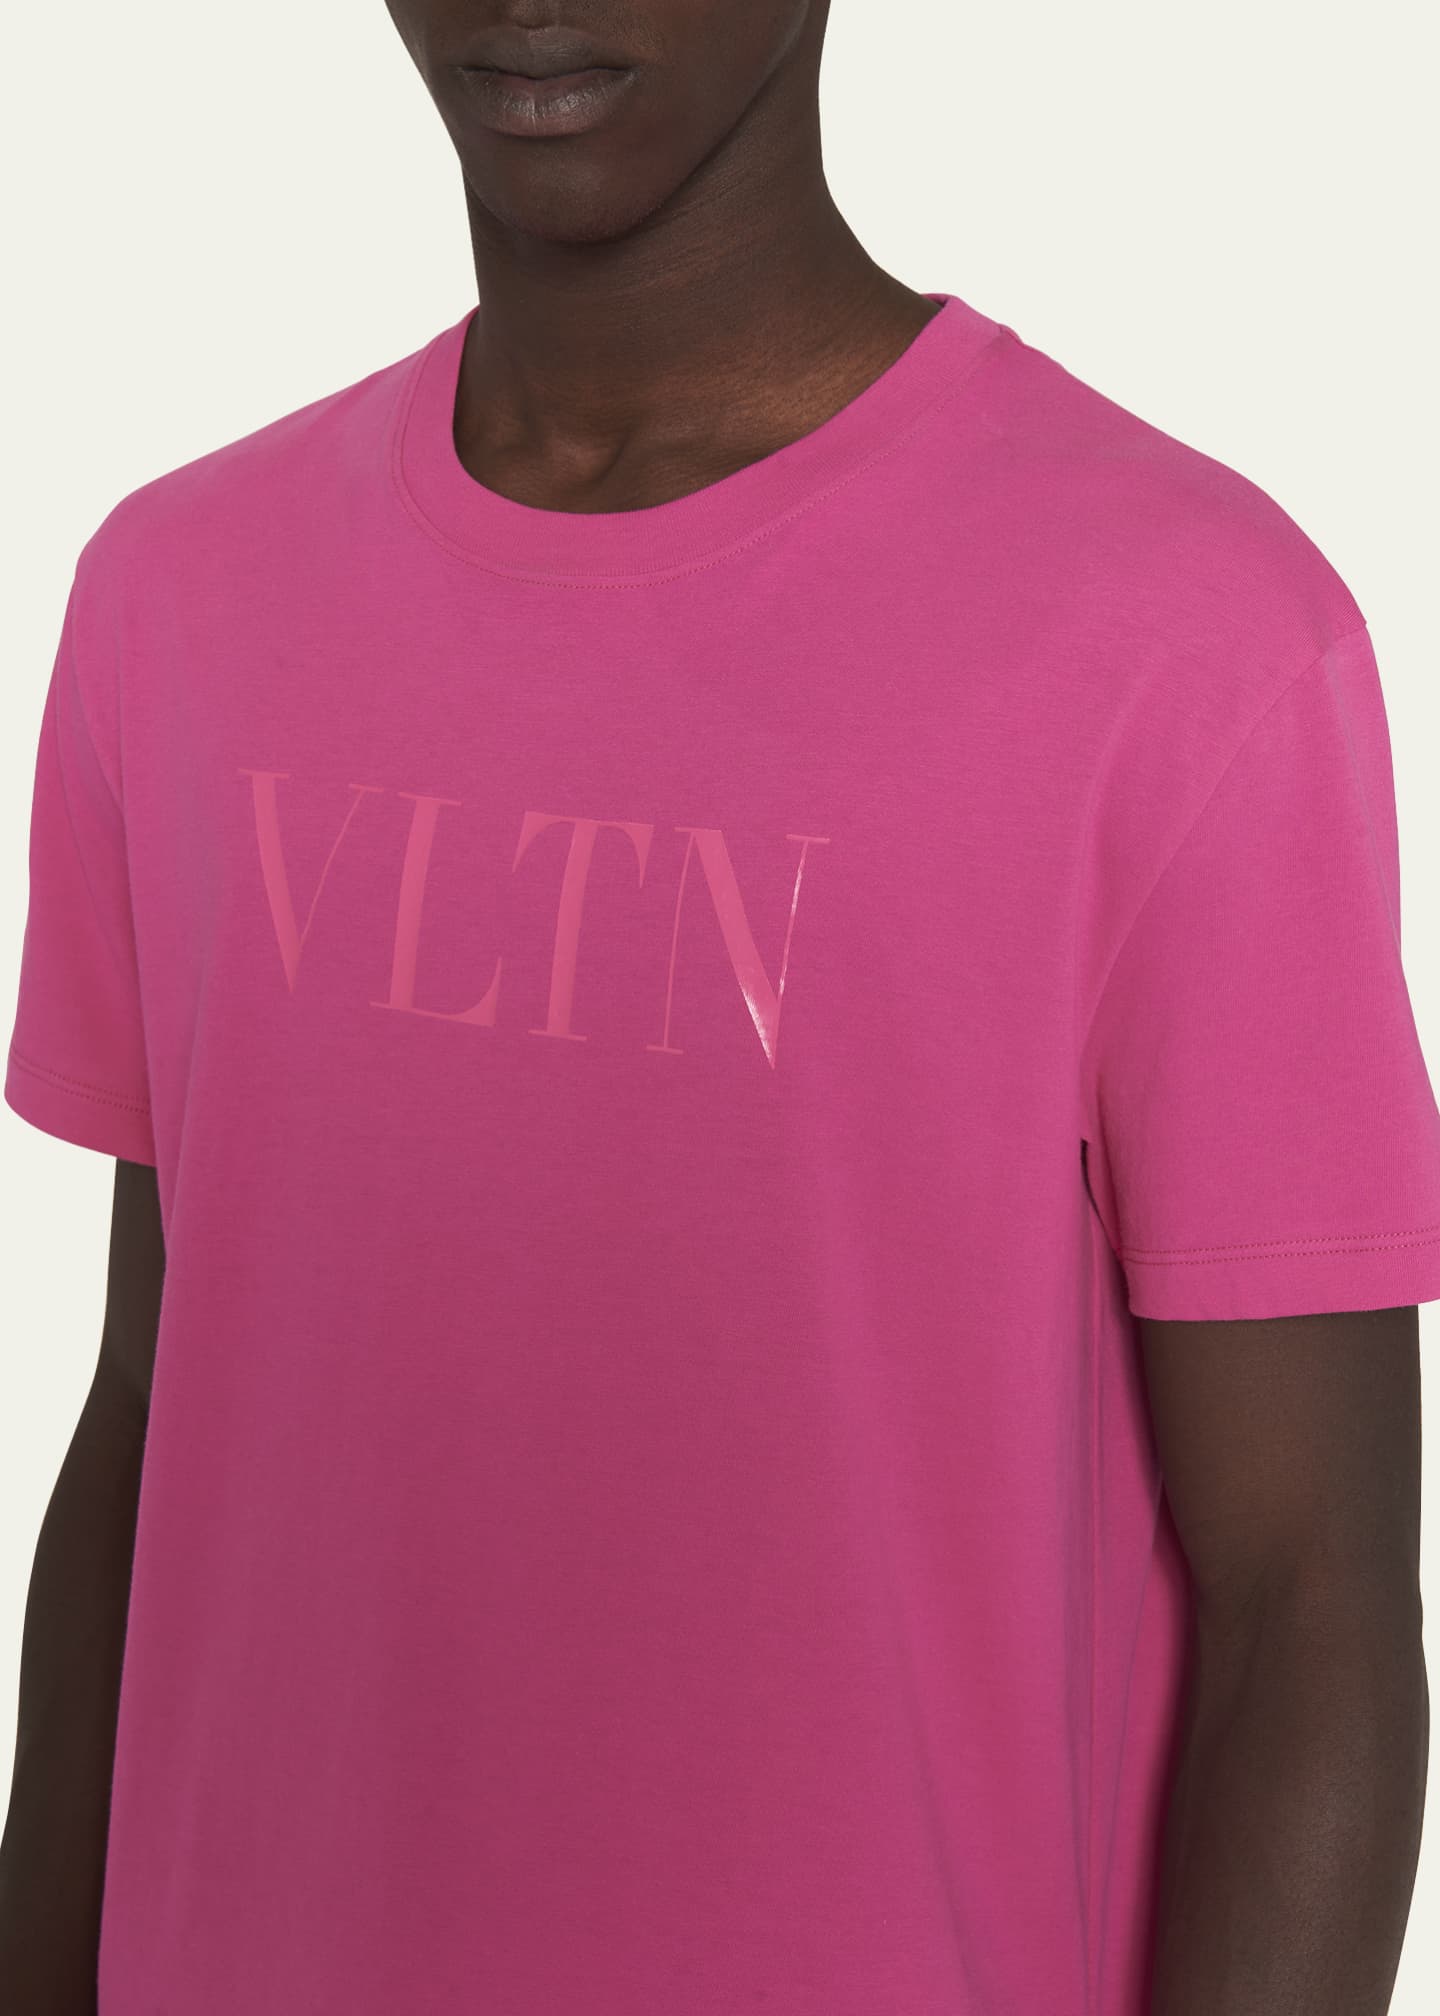 Valentino Garavani Men's Tonal VLTN Crew T-Shirt Bergdorf Goodman